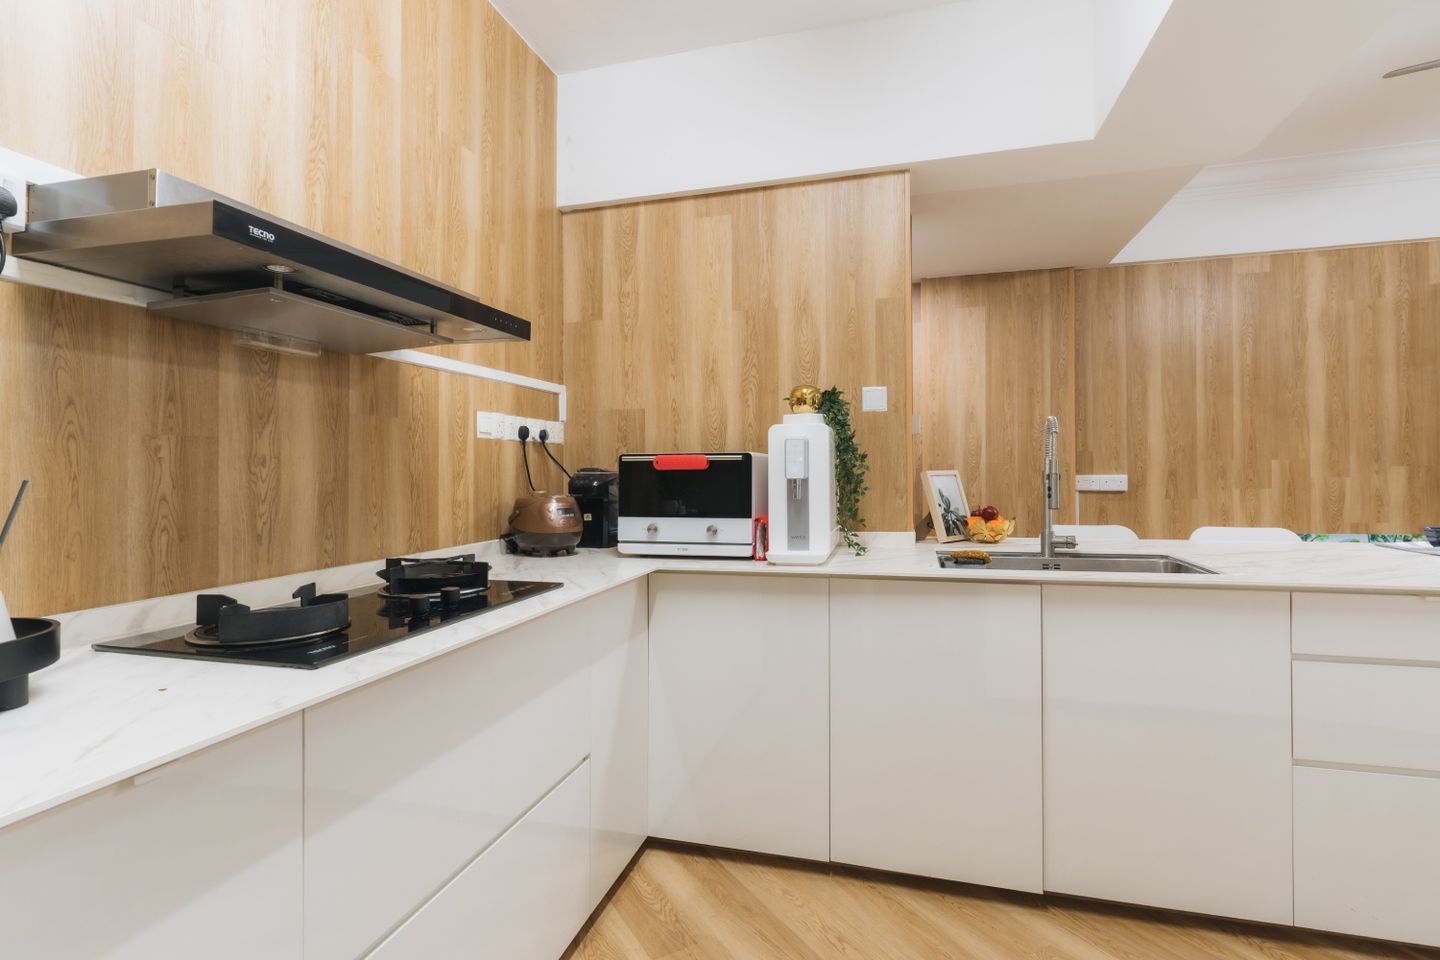 L-Shaped Kitchen Design With White Cabinets And A Quartz Countertop - Livspace